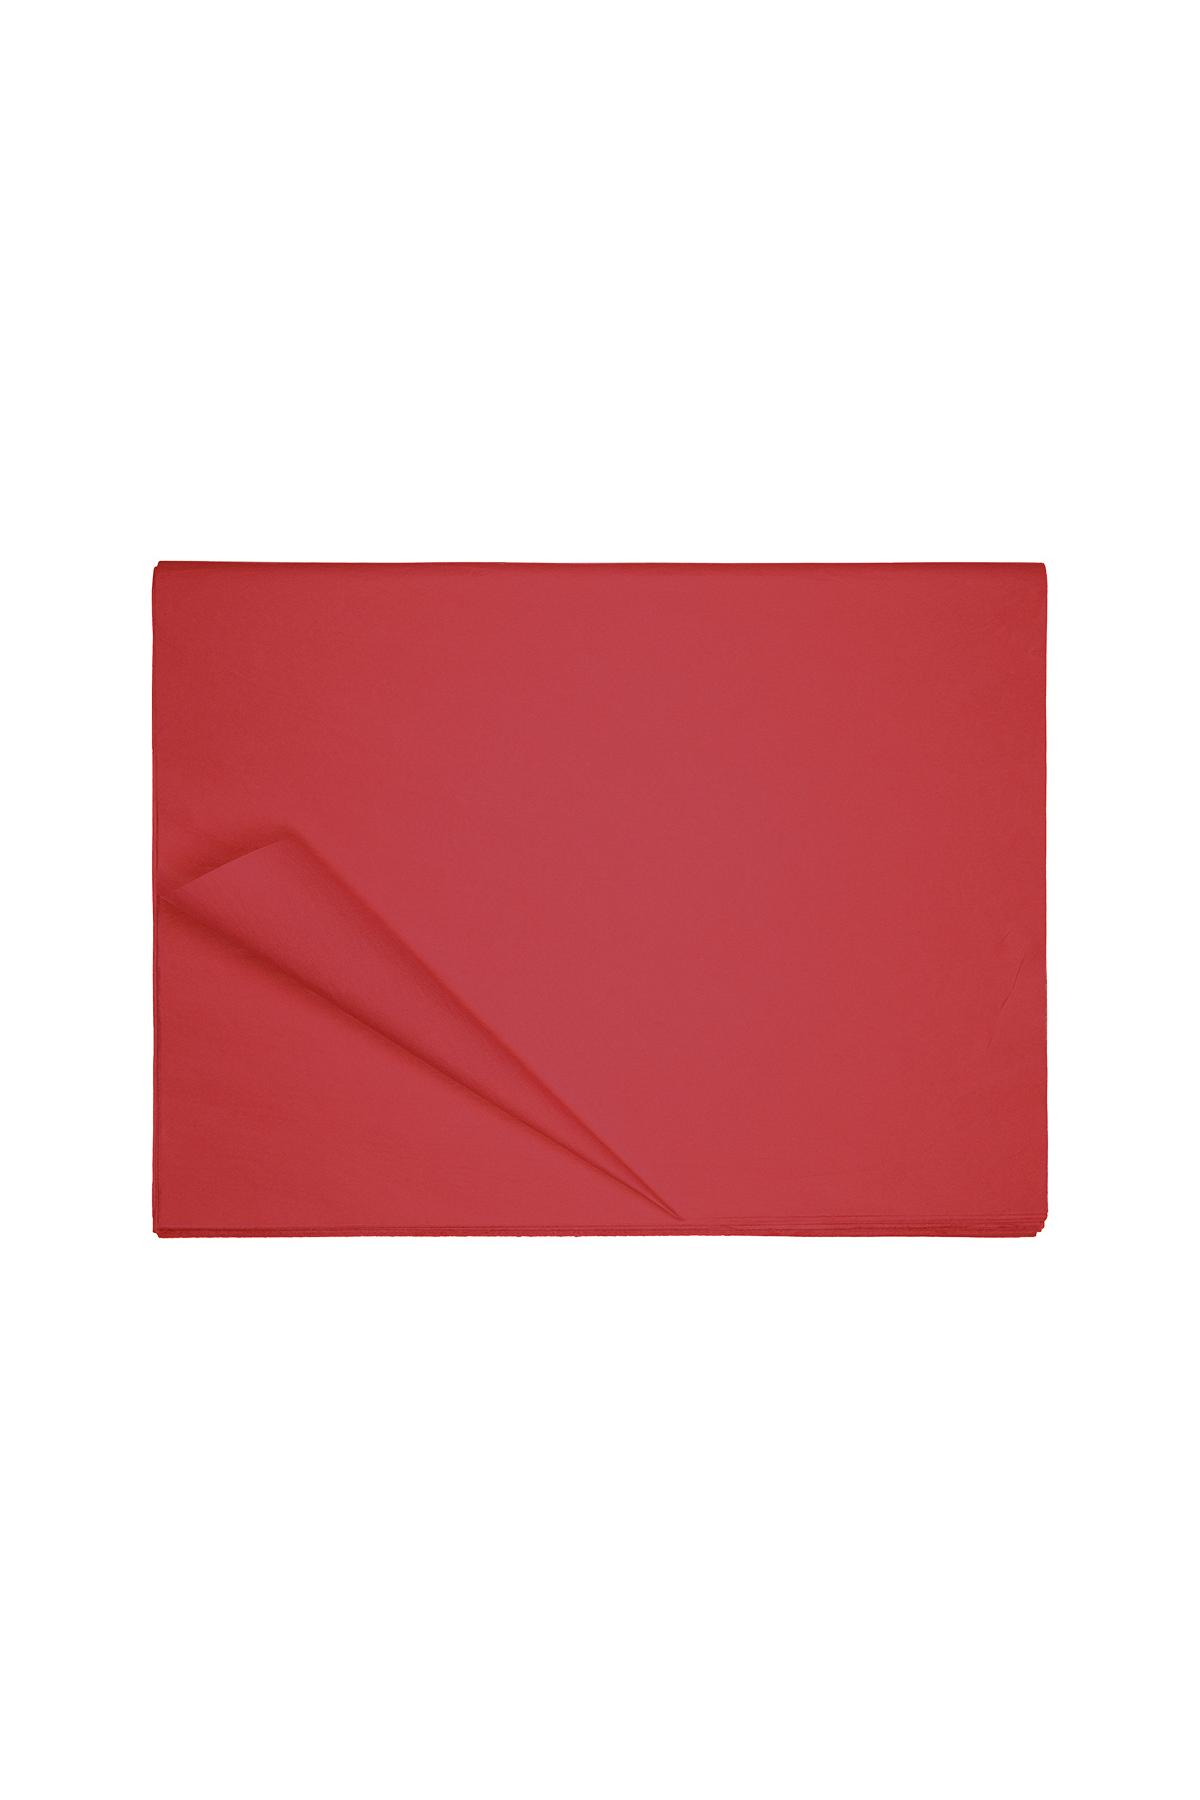 Löschpapier - rotes Papier 